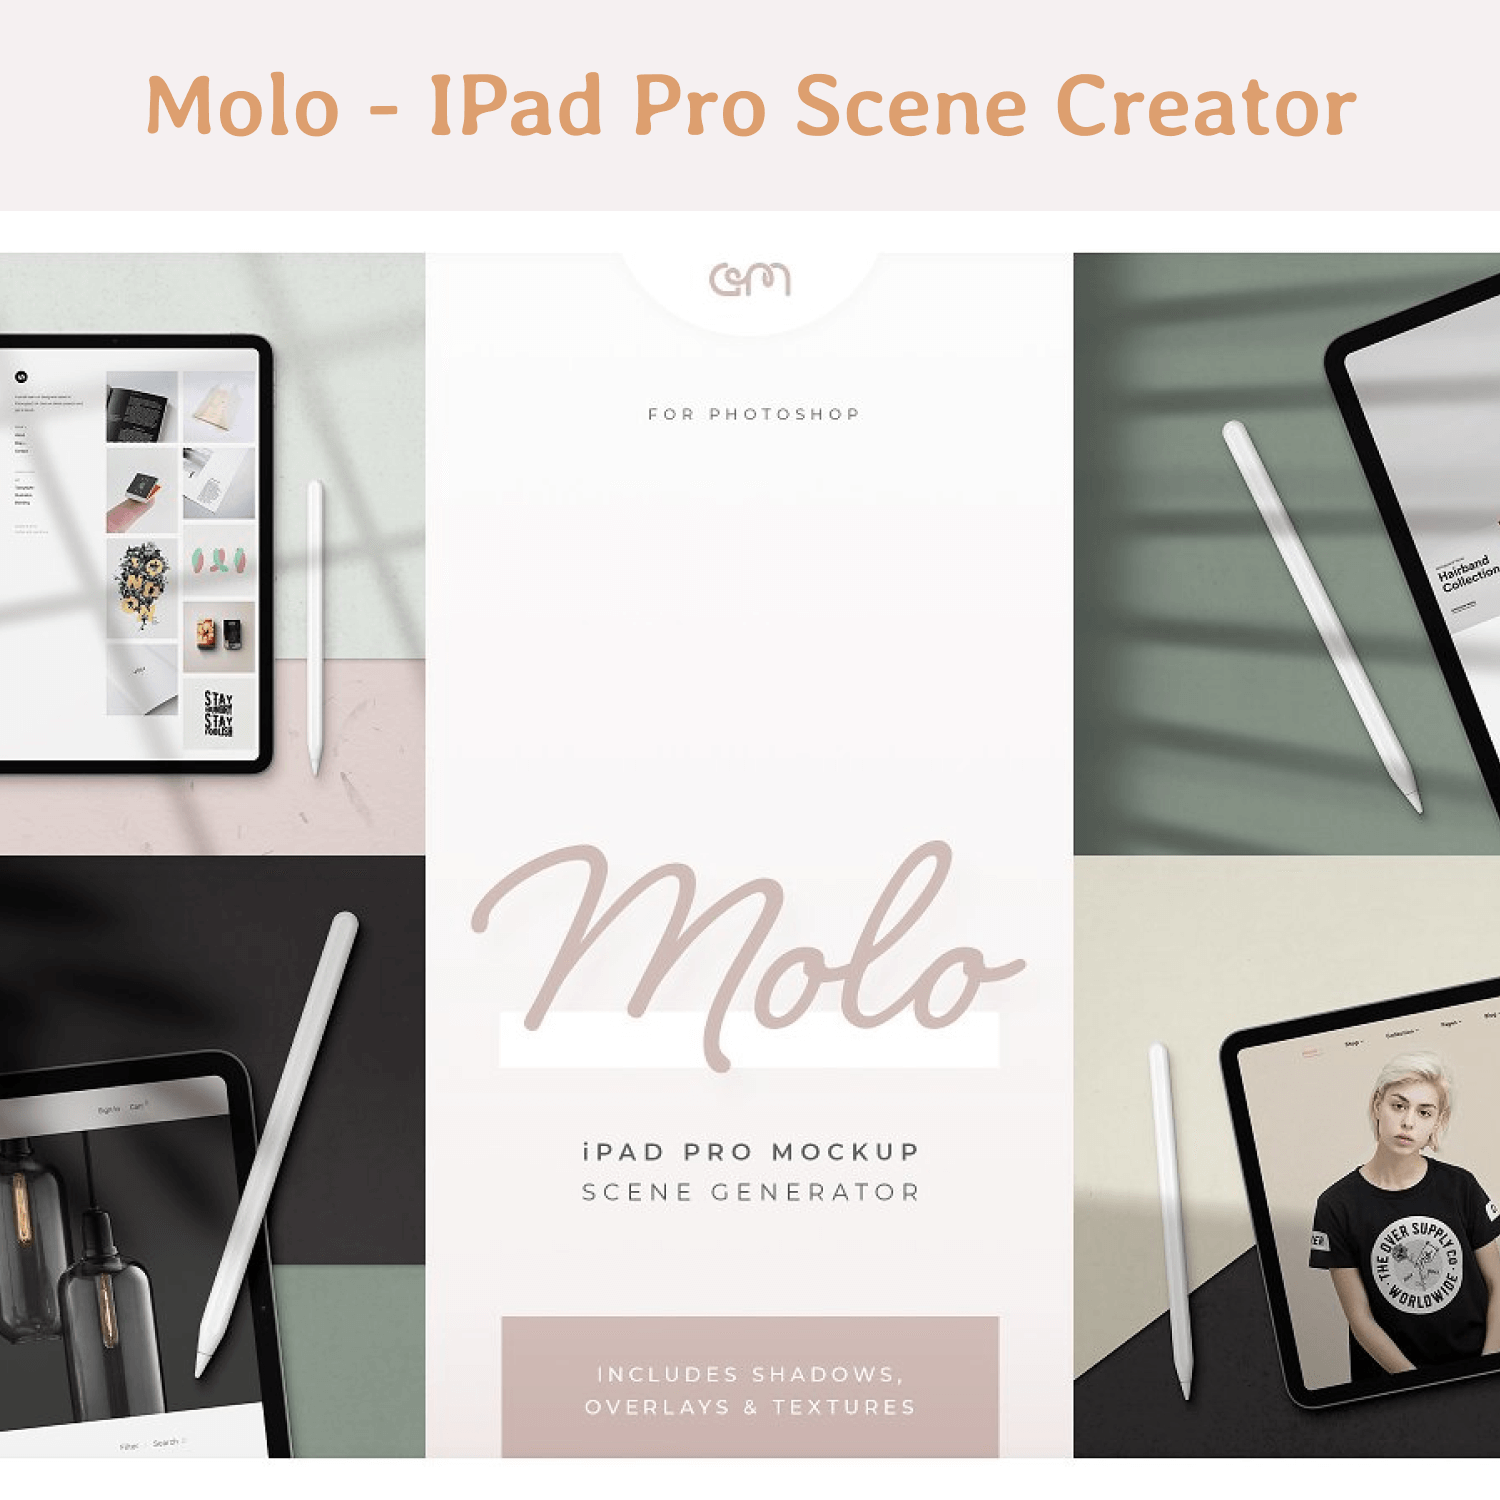 Molo IPad Pro Scene Creator.